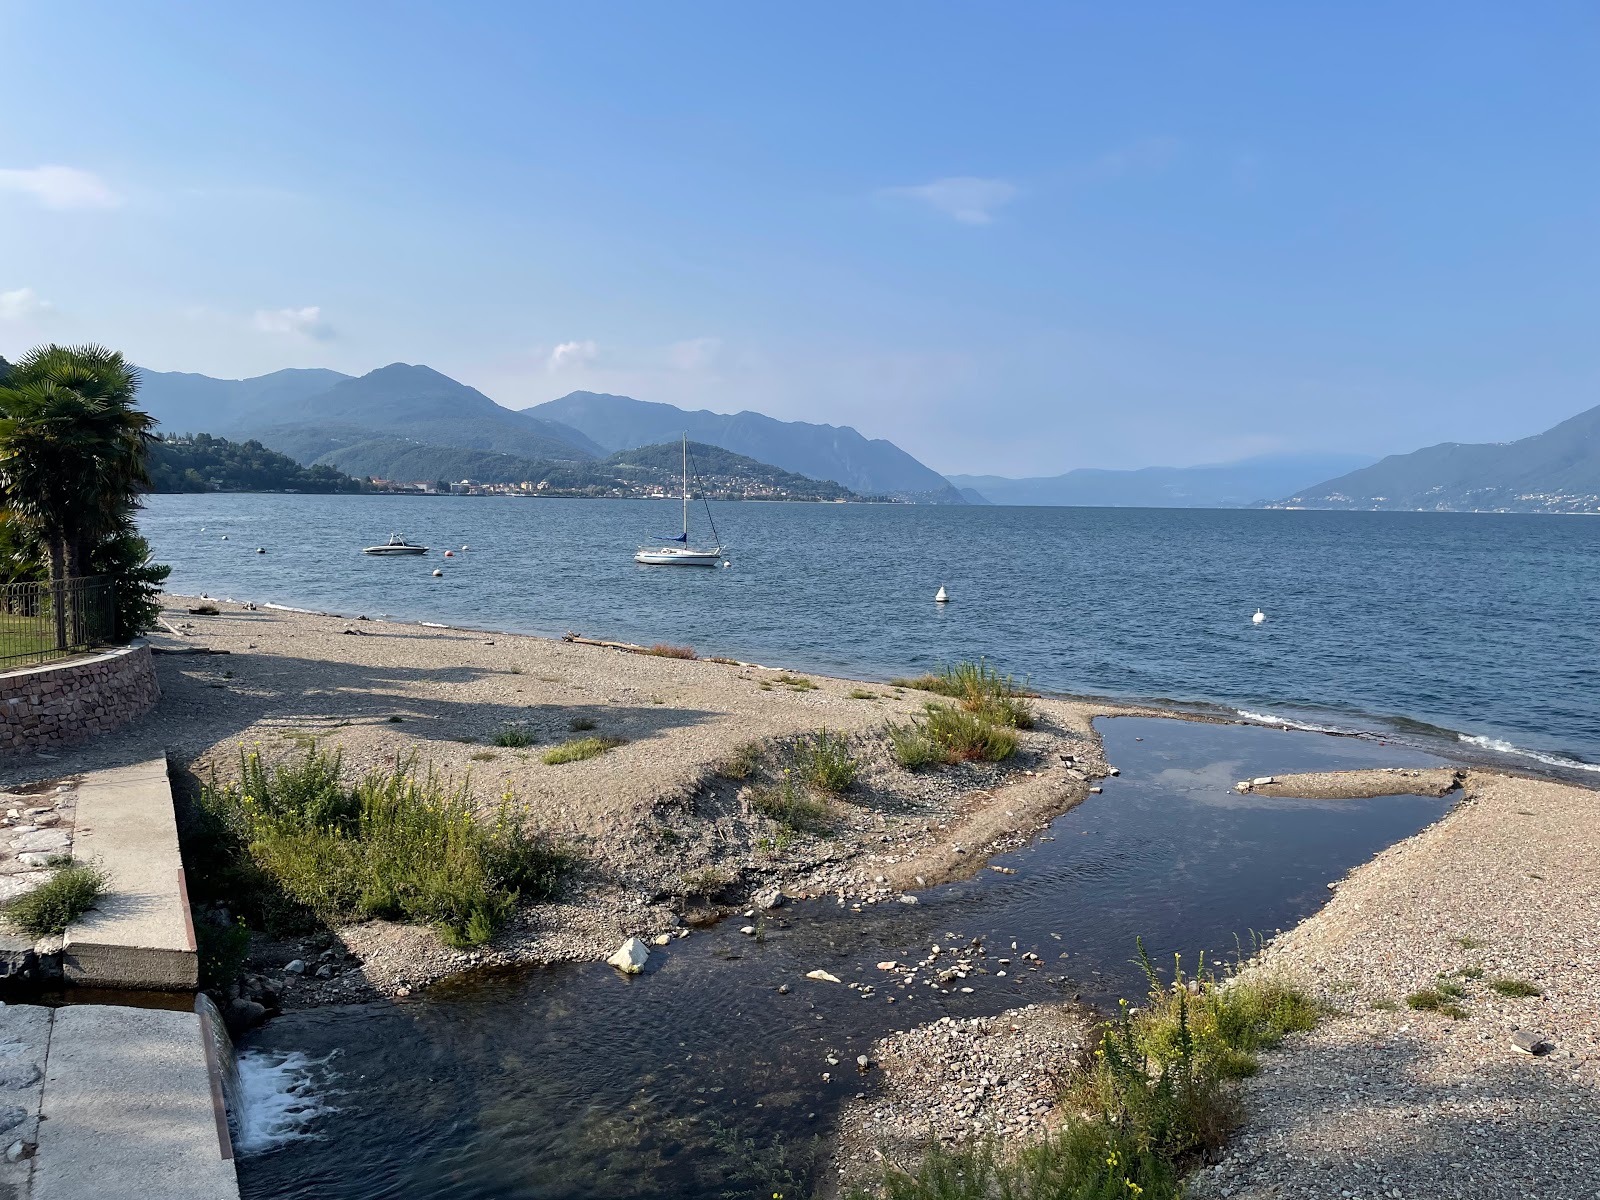 Colmegna Spiaggia的照片 带有碧绿色纯水表面